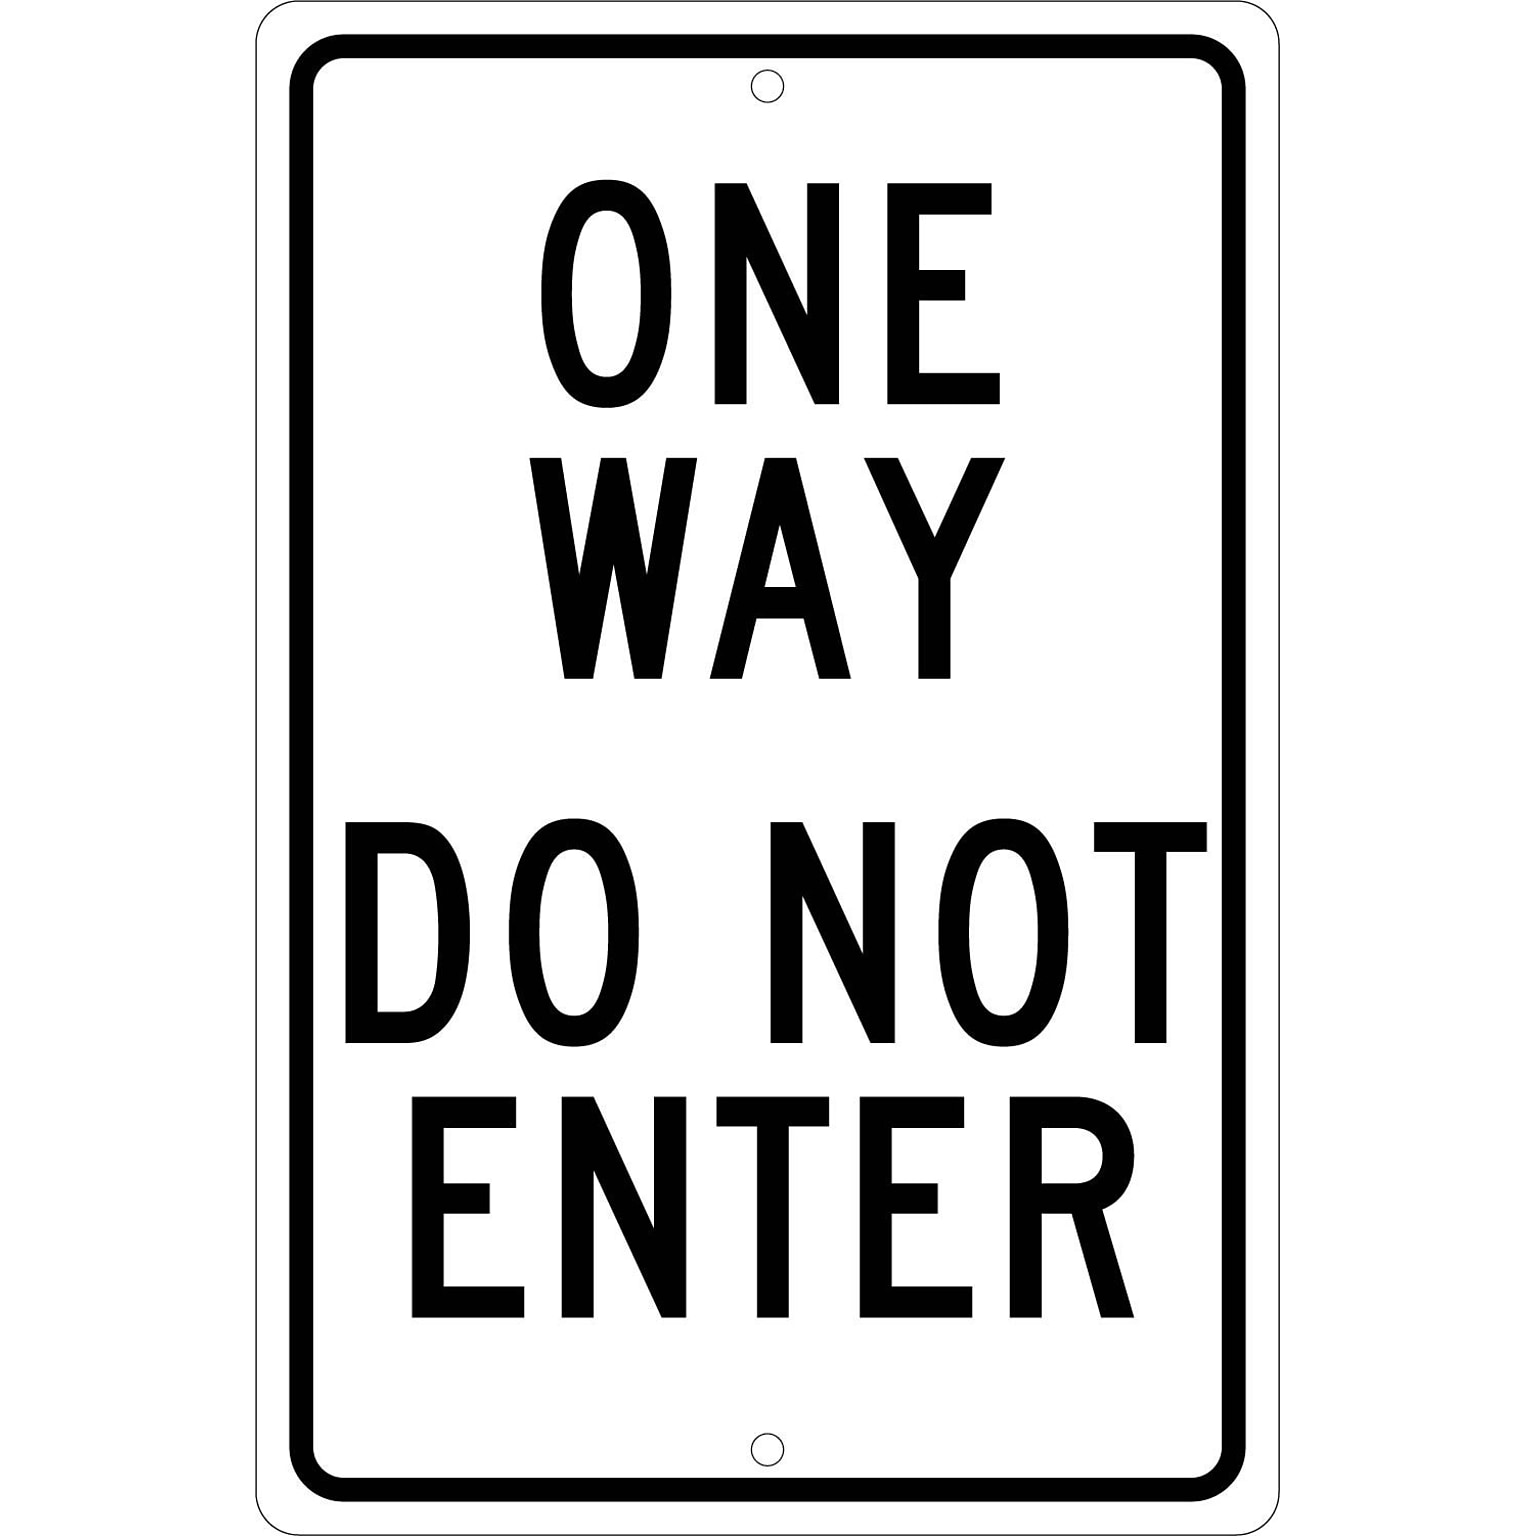 National Marker Reflective One Way Do Not Enter Regulatory Traffic Sign, 18 x 12, Aluminum (TM73H)